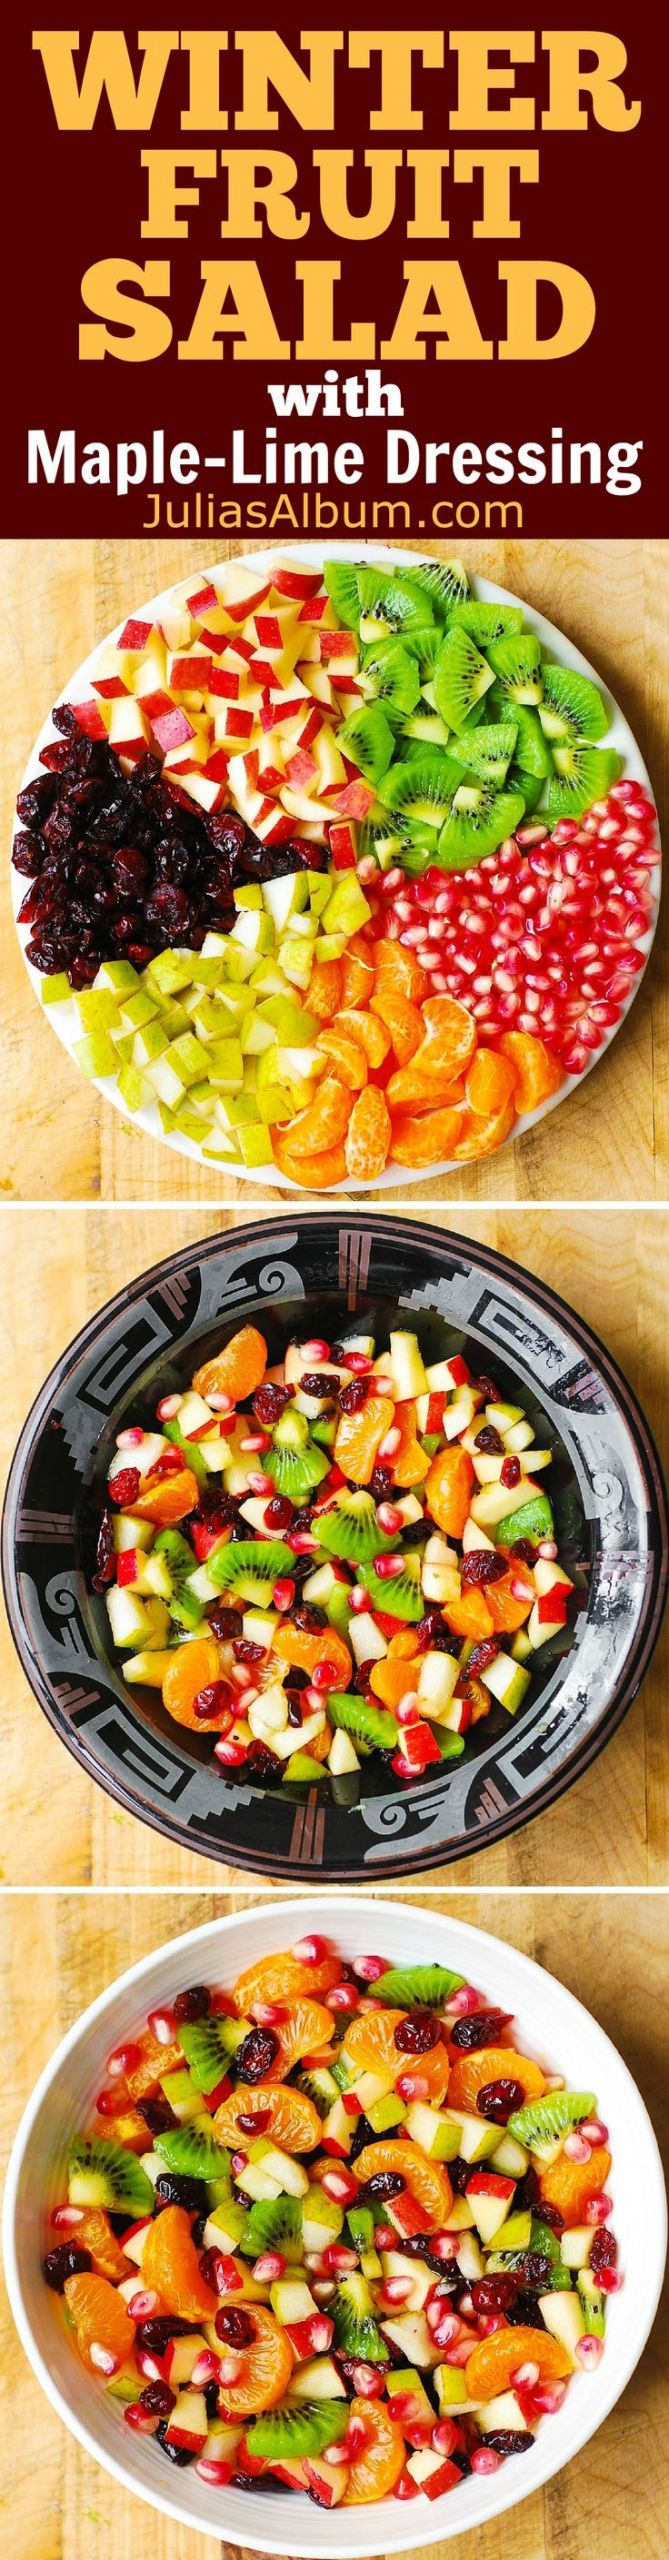 Winter Fruit Salad Ideas
 Best 25 Christmas fruit salad ideas on Pinterest